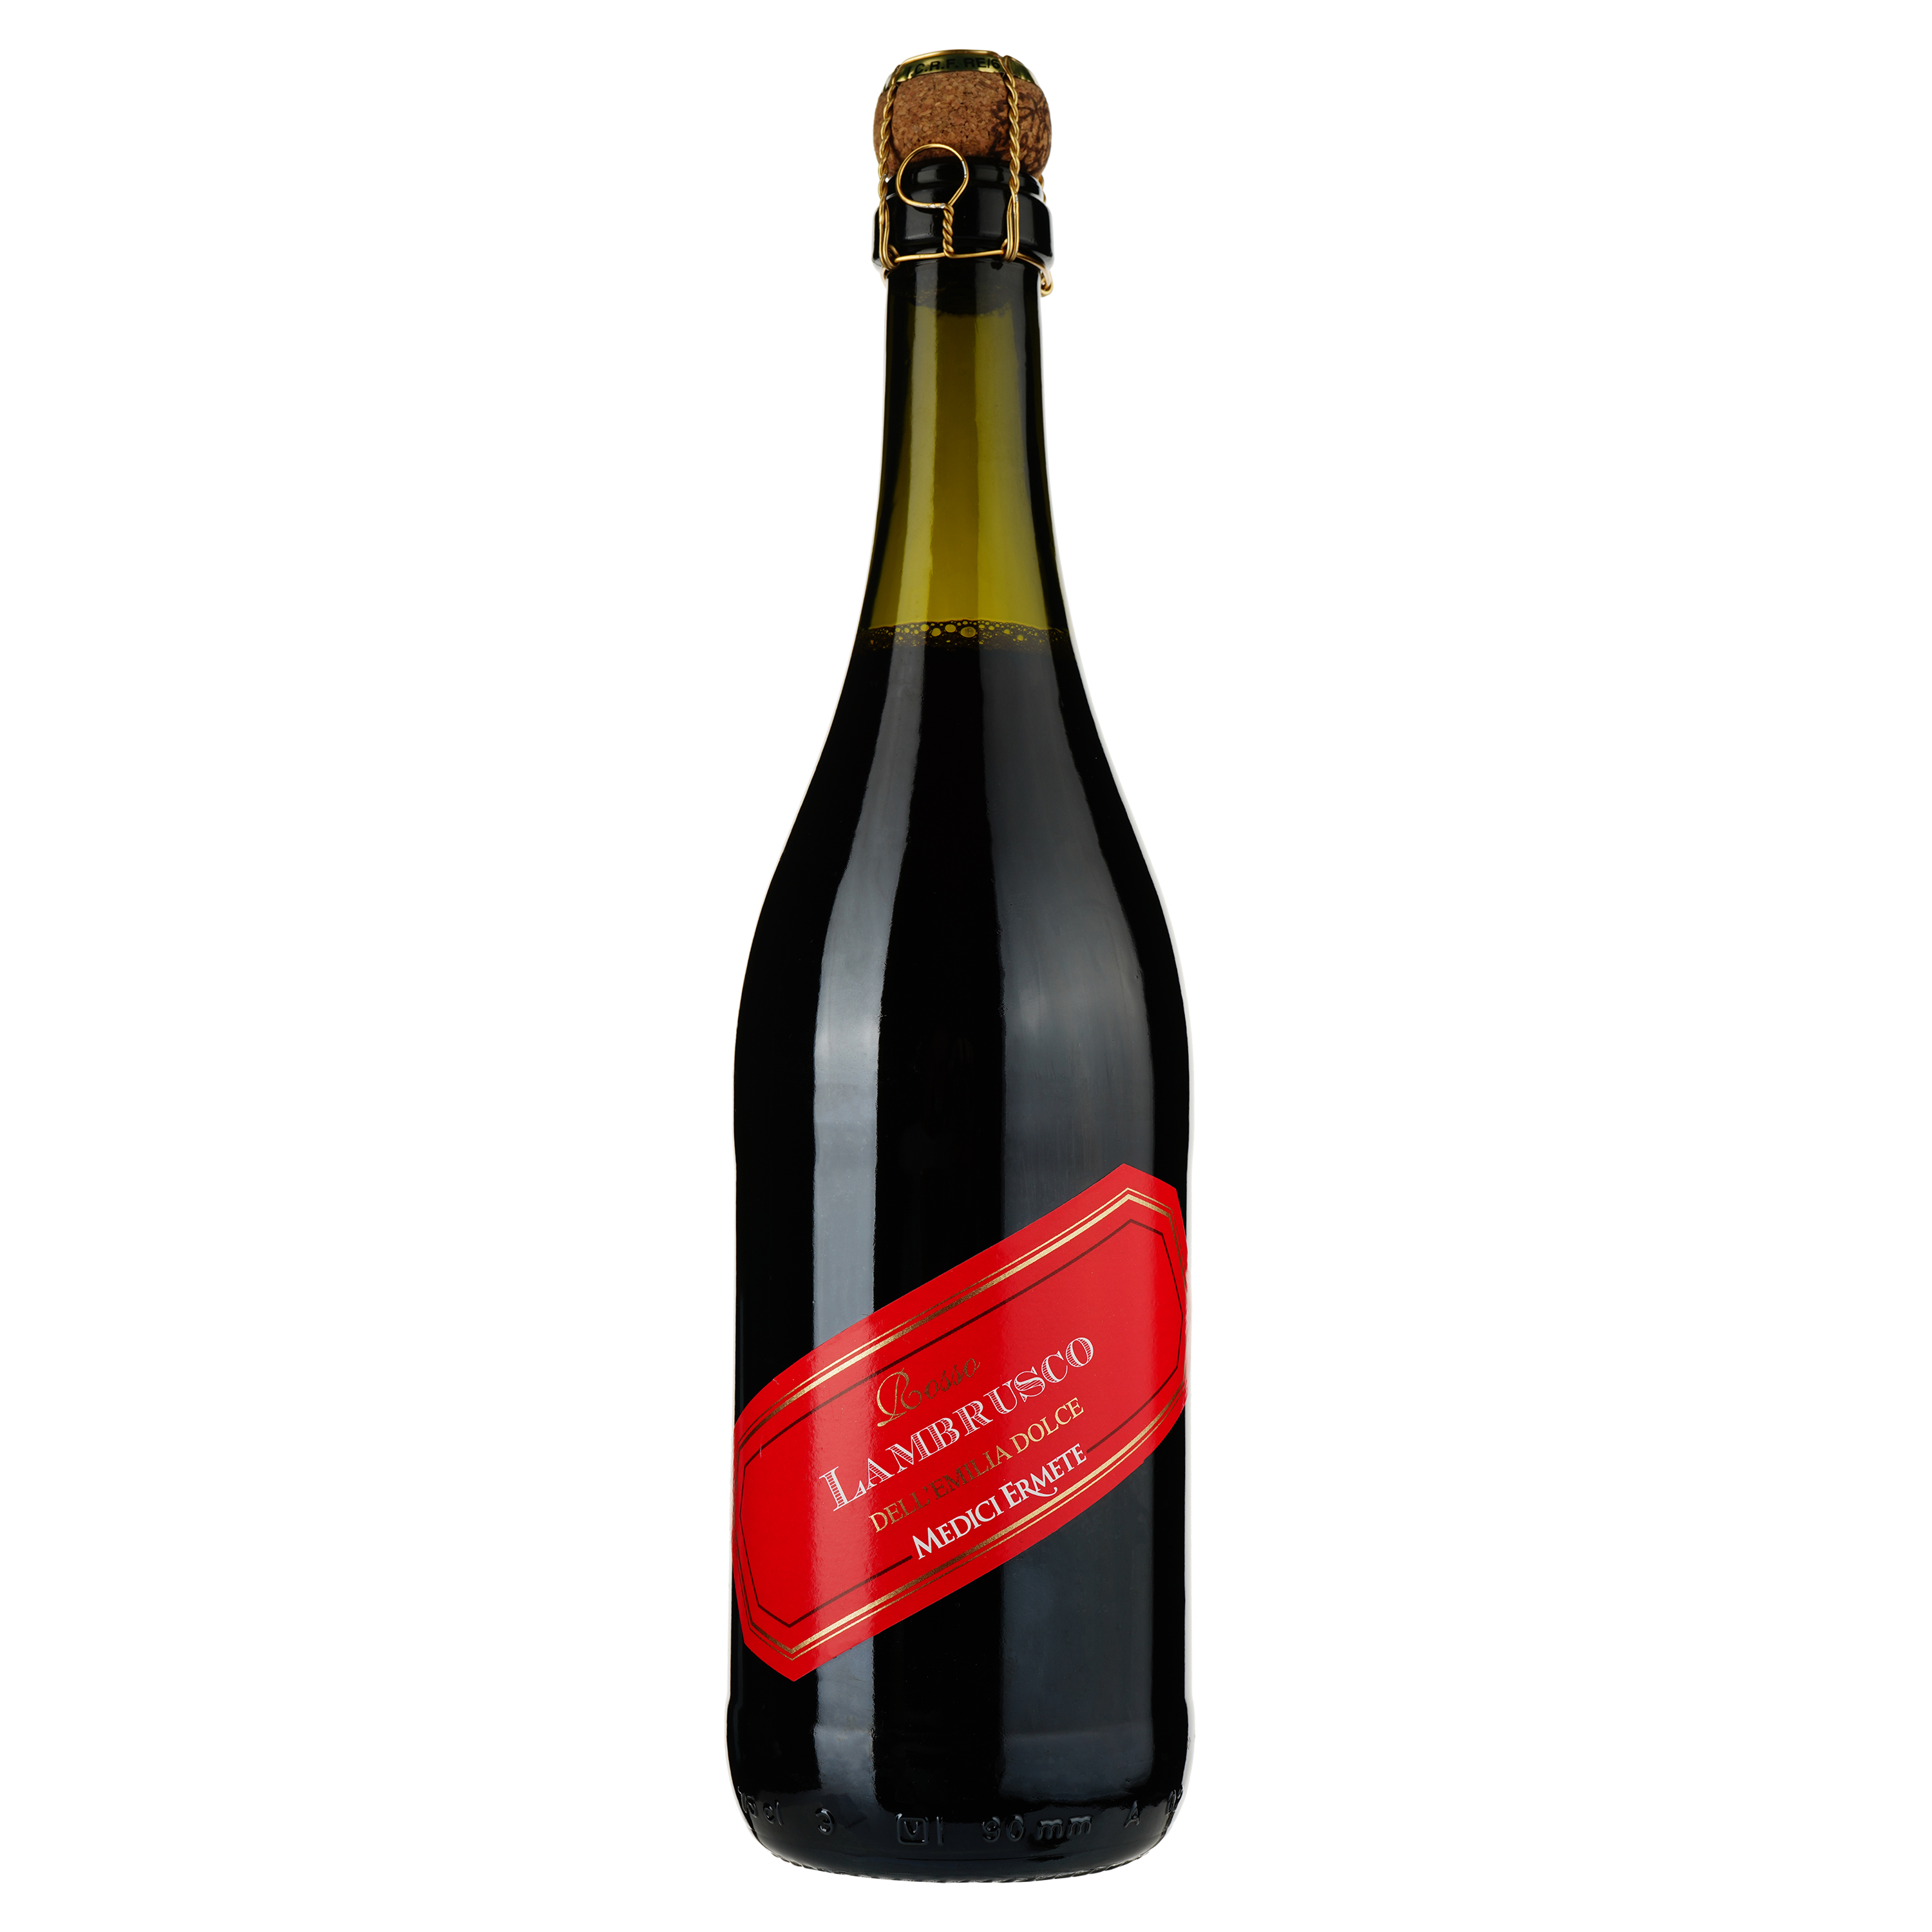 Игристое вино Medici Ermete Lambrusco dell`Emilia Rosso frizzante dolce IGT, красное, сладкое, 8%, 0,75 л - фото 1